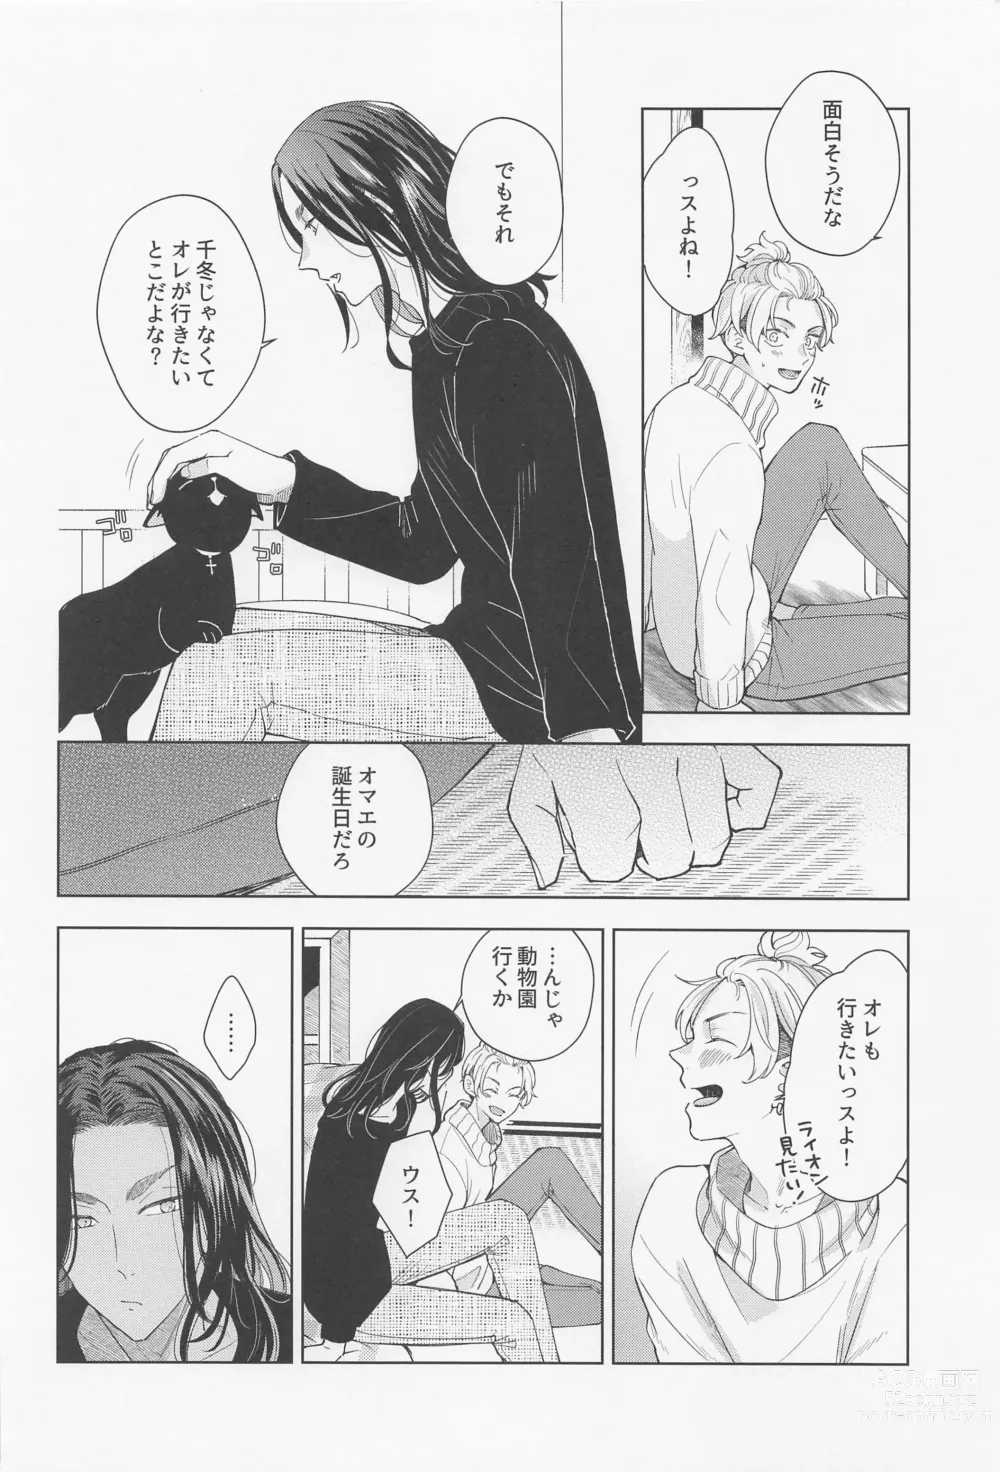 Page 13 of doujinshi Hopeless Romantic